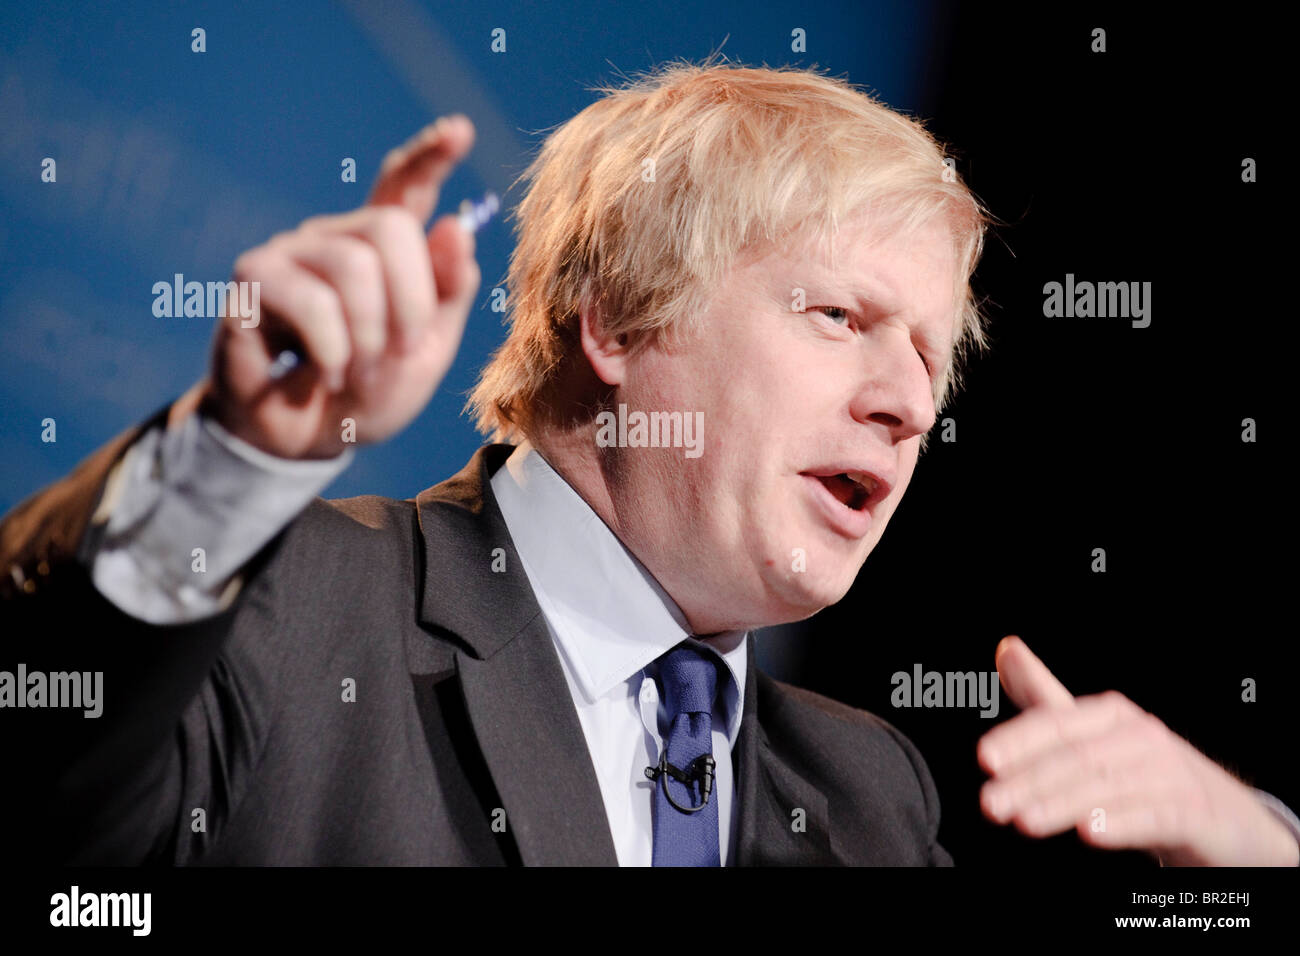 London Mayor, Boris Johnson, addresses the 'One Young World' Summit, London, 8th February 2010. Stock Photo